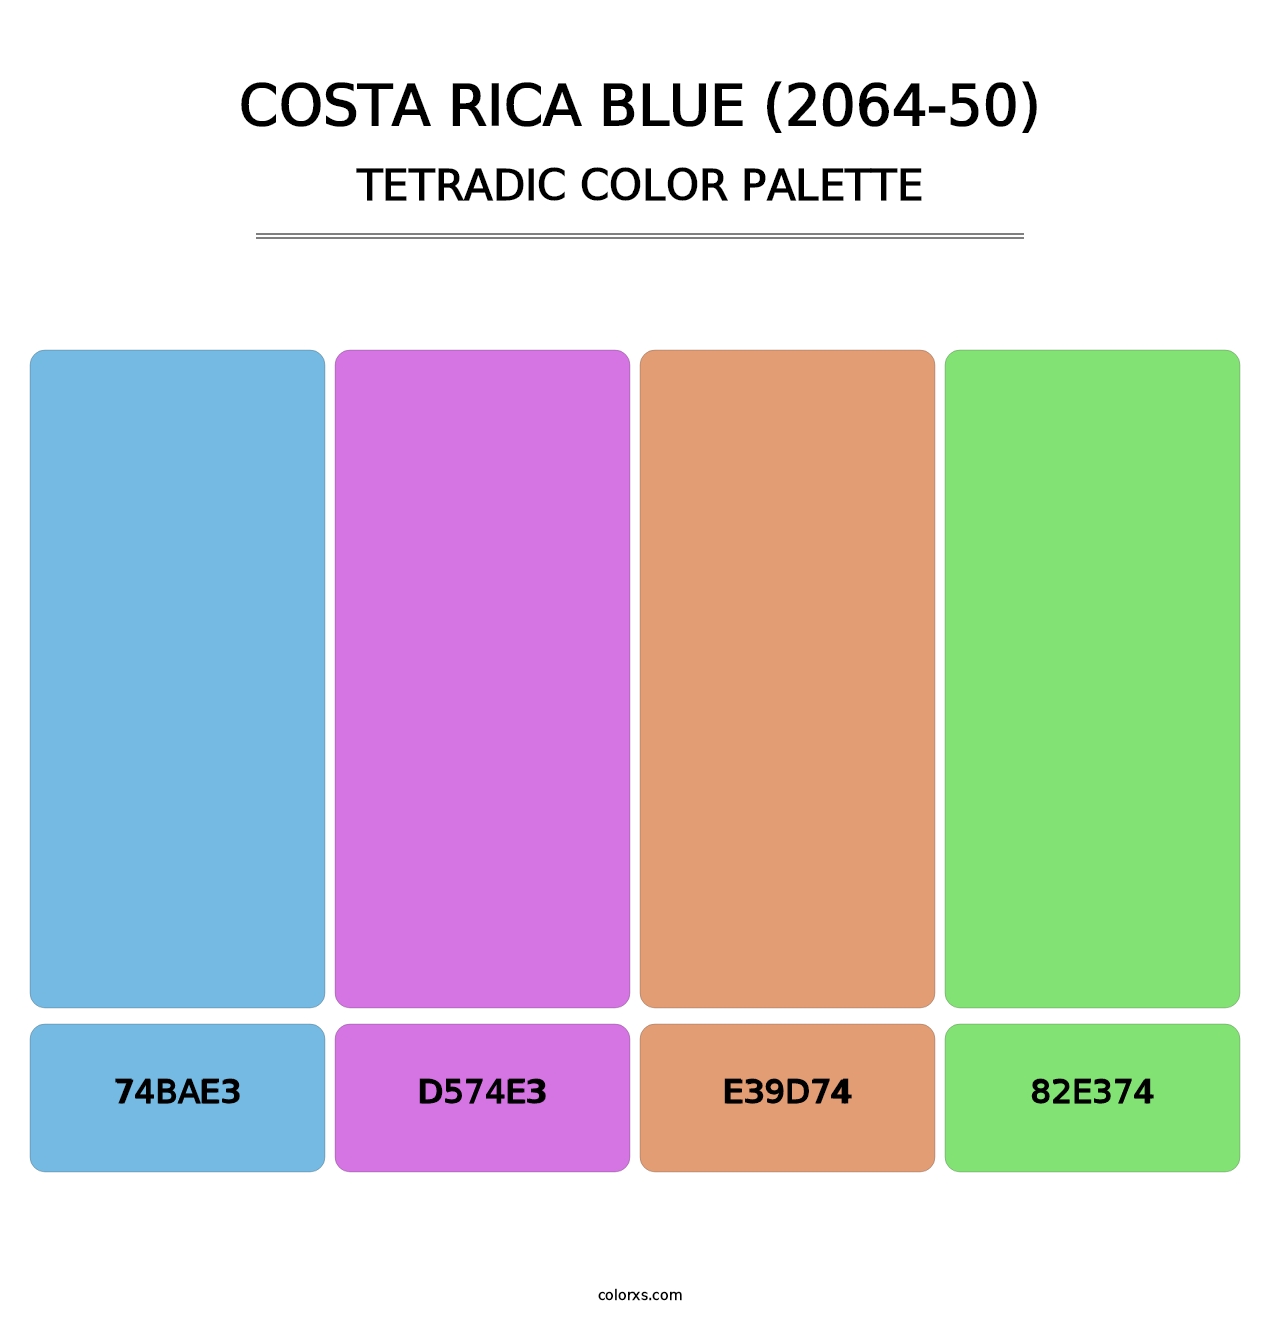 Costa Rica Blue (2064-50) - Tetradic Color Palette